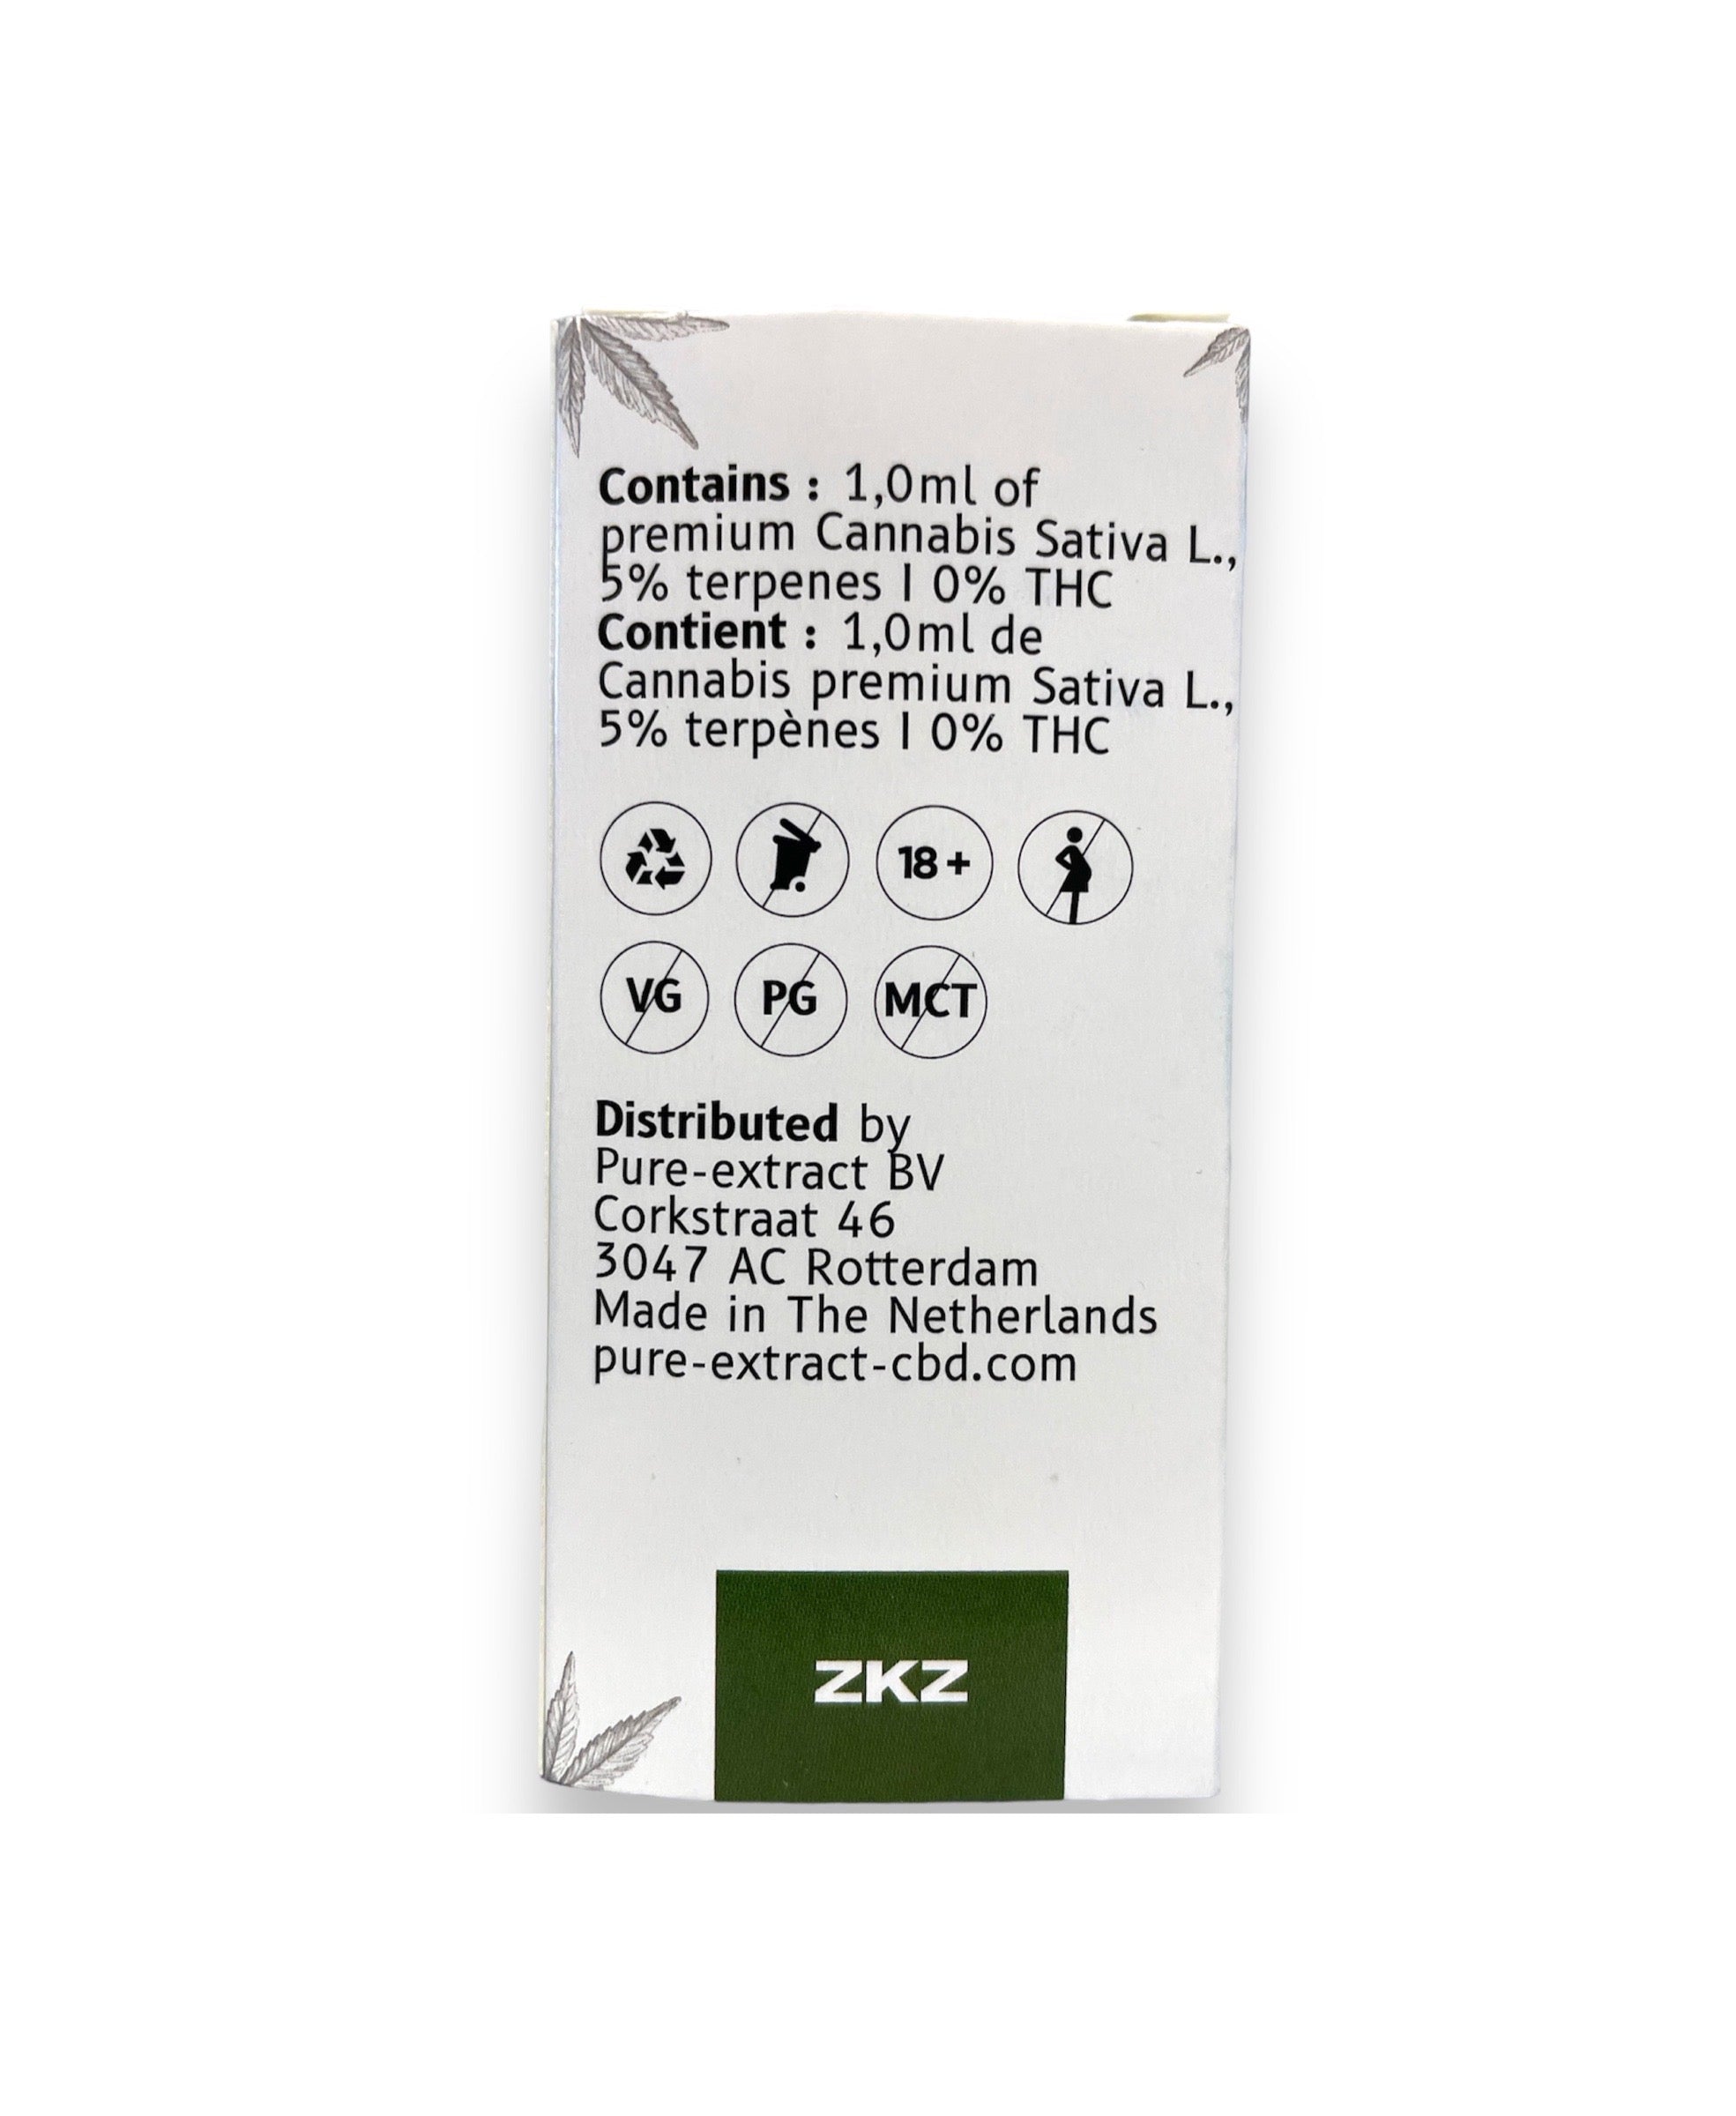 Pure Extract CBD Cartridge (Dab Pen) van H4CBD - ZKZ - 95% H4CBD - 1ML - 600 trekjes